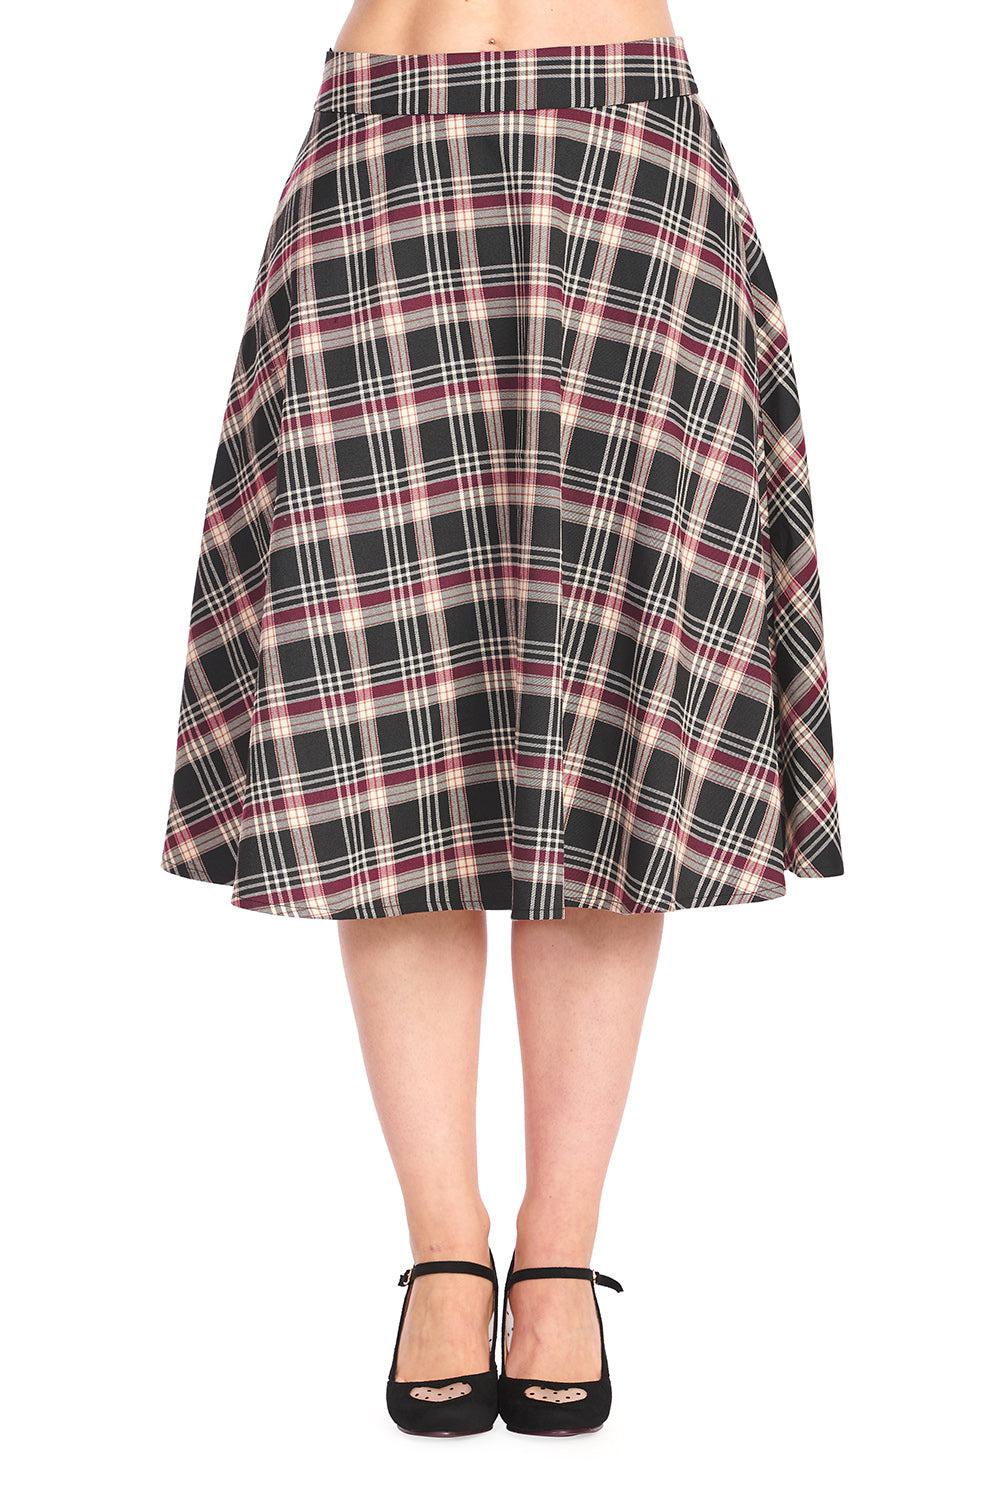 Winter Dreaming Swing Skirt-Banned-Dark Fashion Clothing